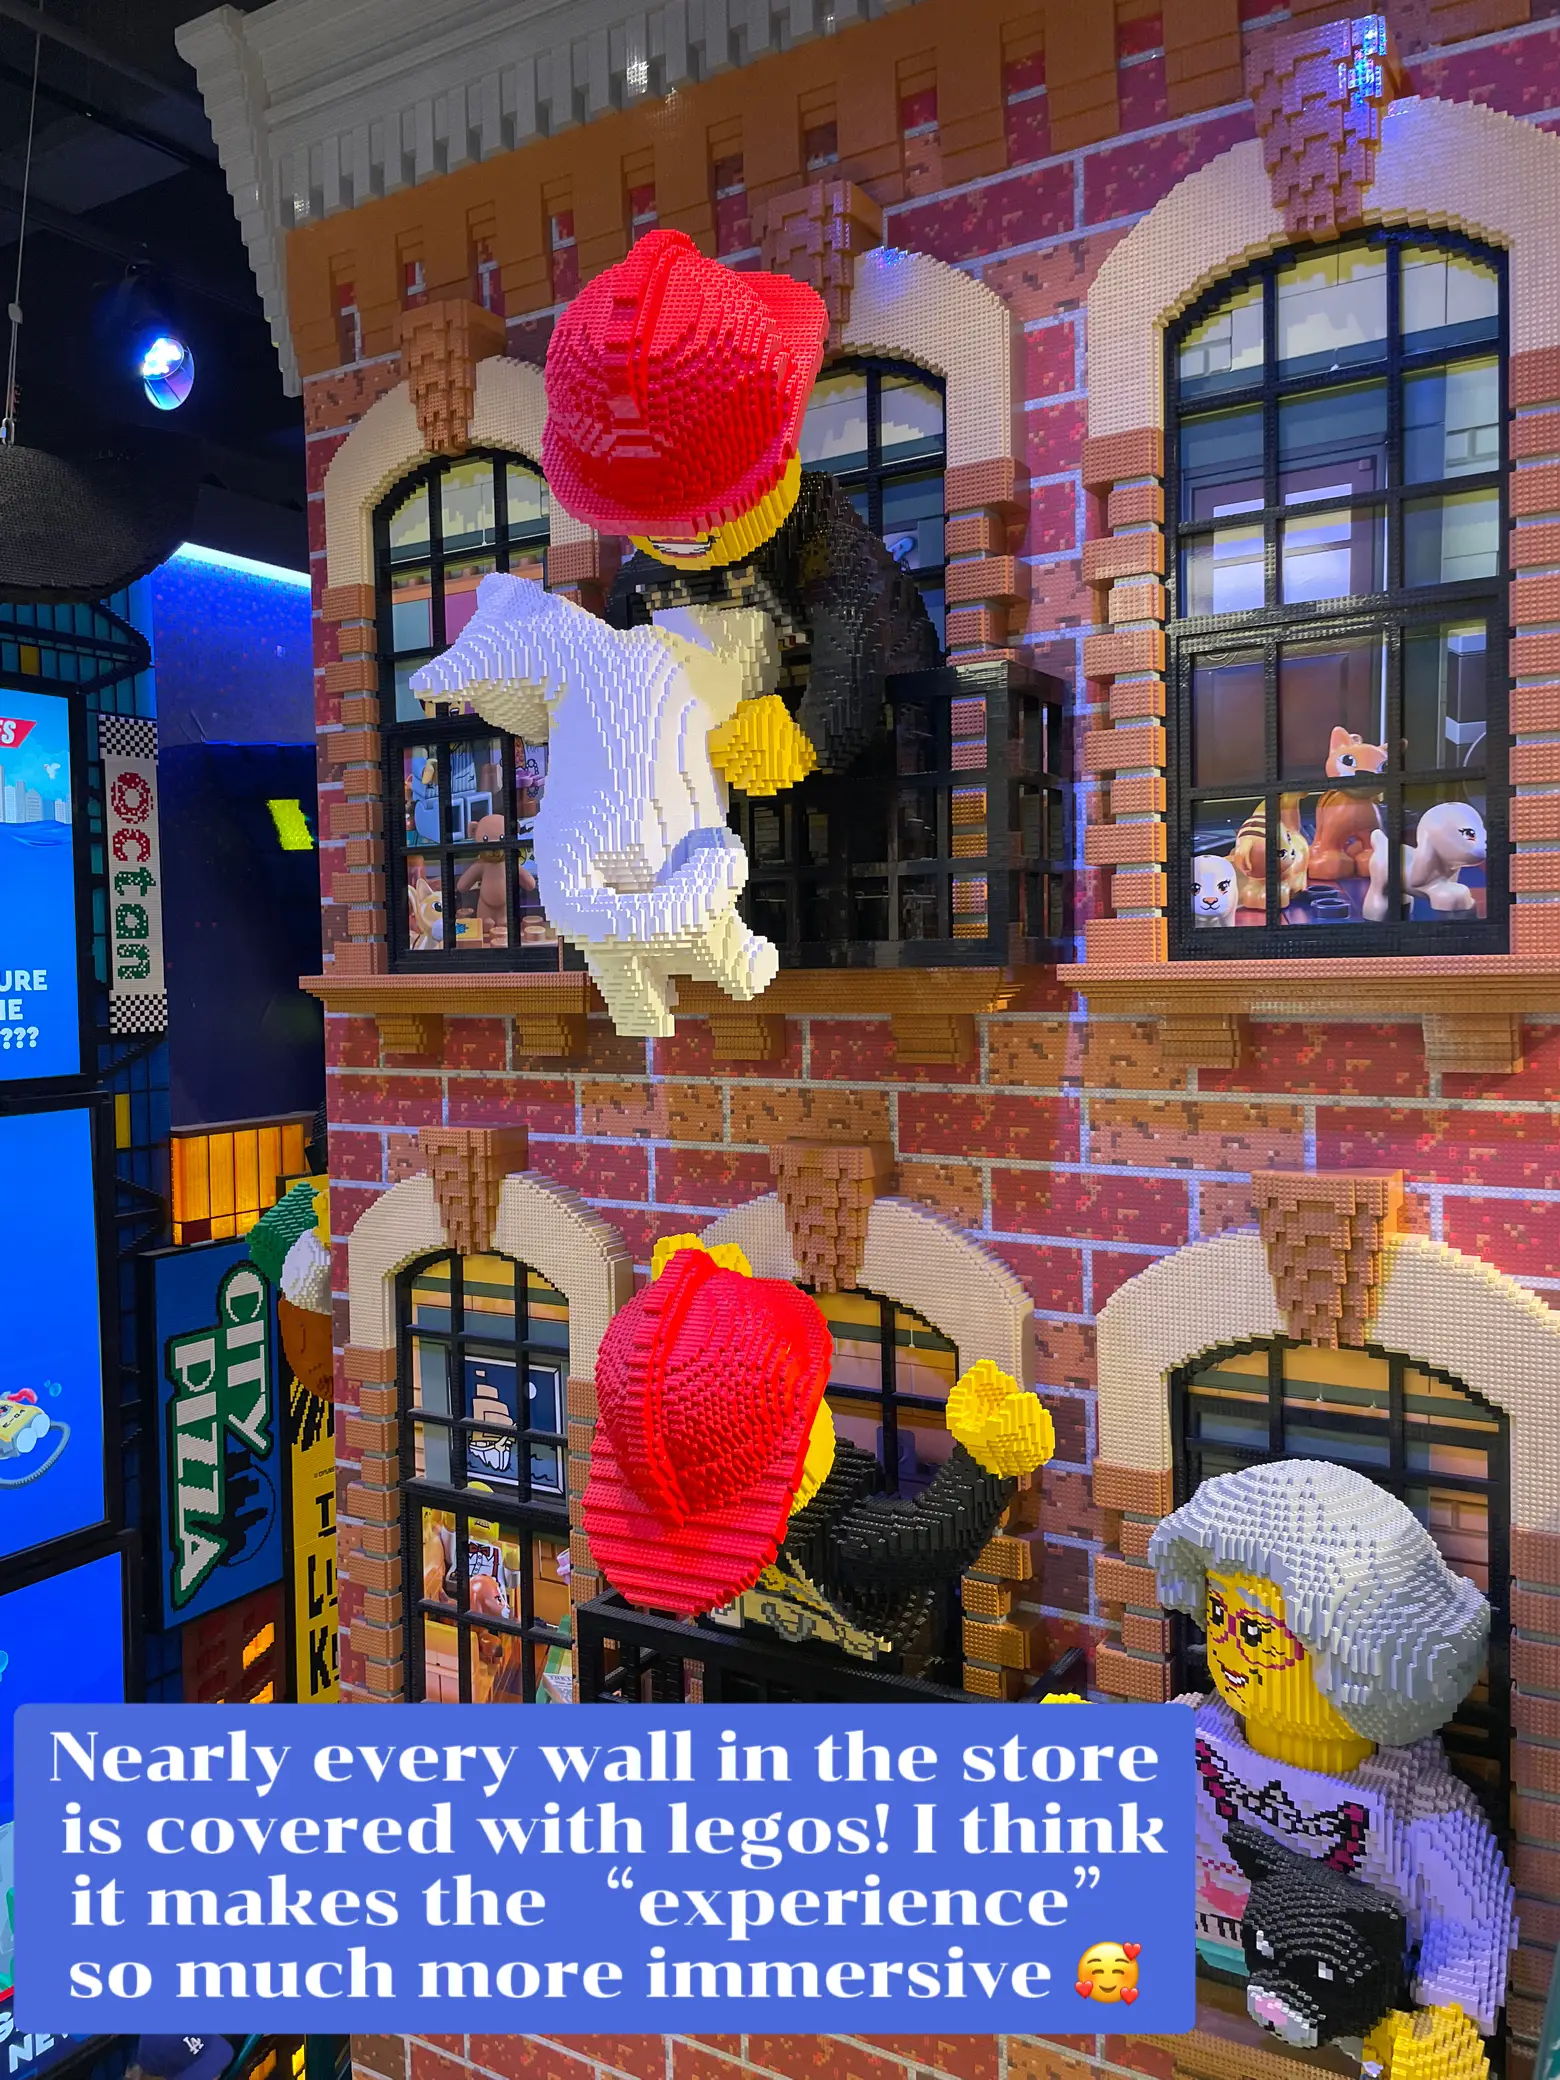 LEGO® Minifigures Disney 100 – 71038 – LEGOLAND New York Resort